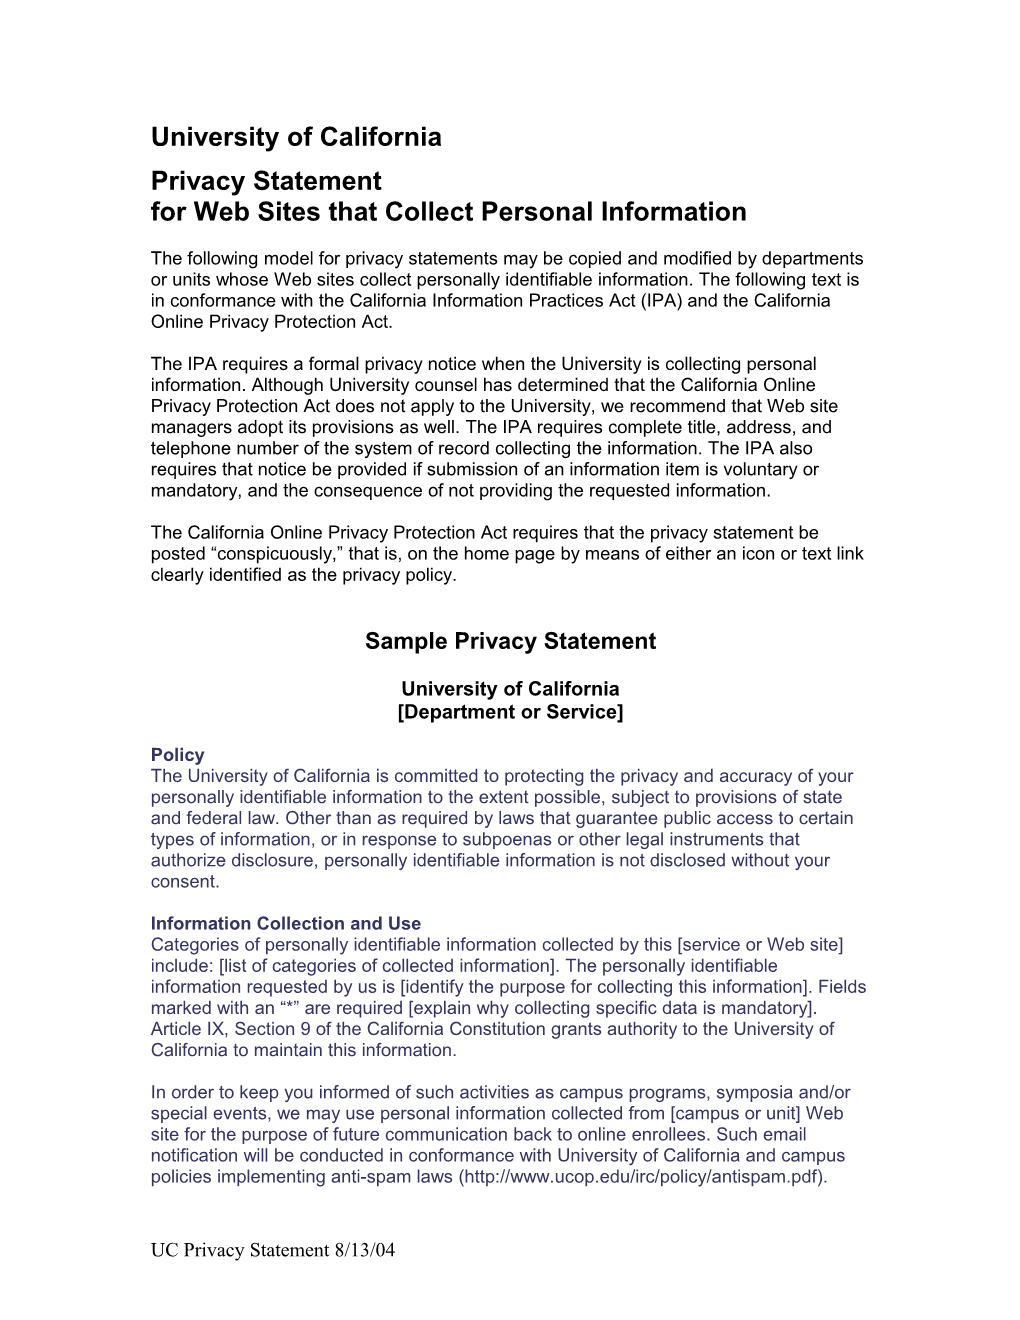 Privacy Statement For University Of California, Berkeley Websites